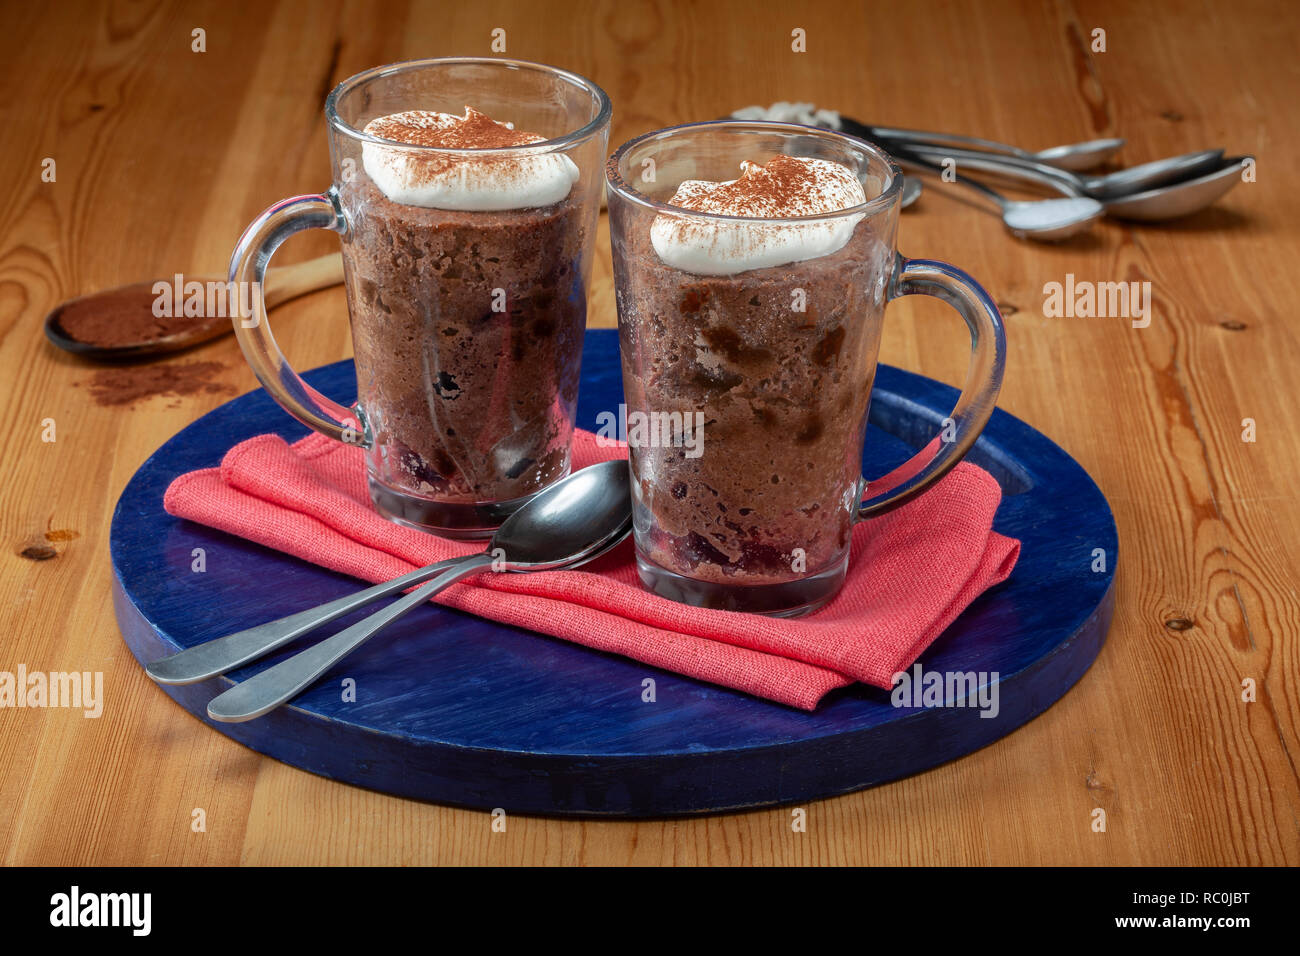 Chocolate keto mug cake Stock Photo